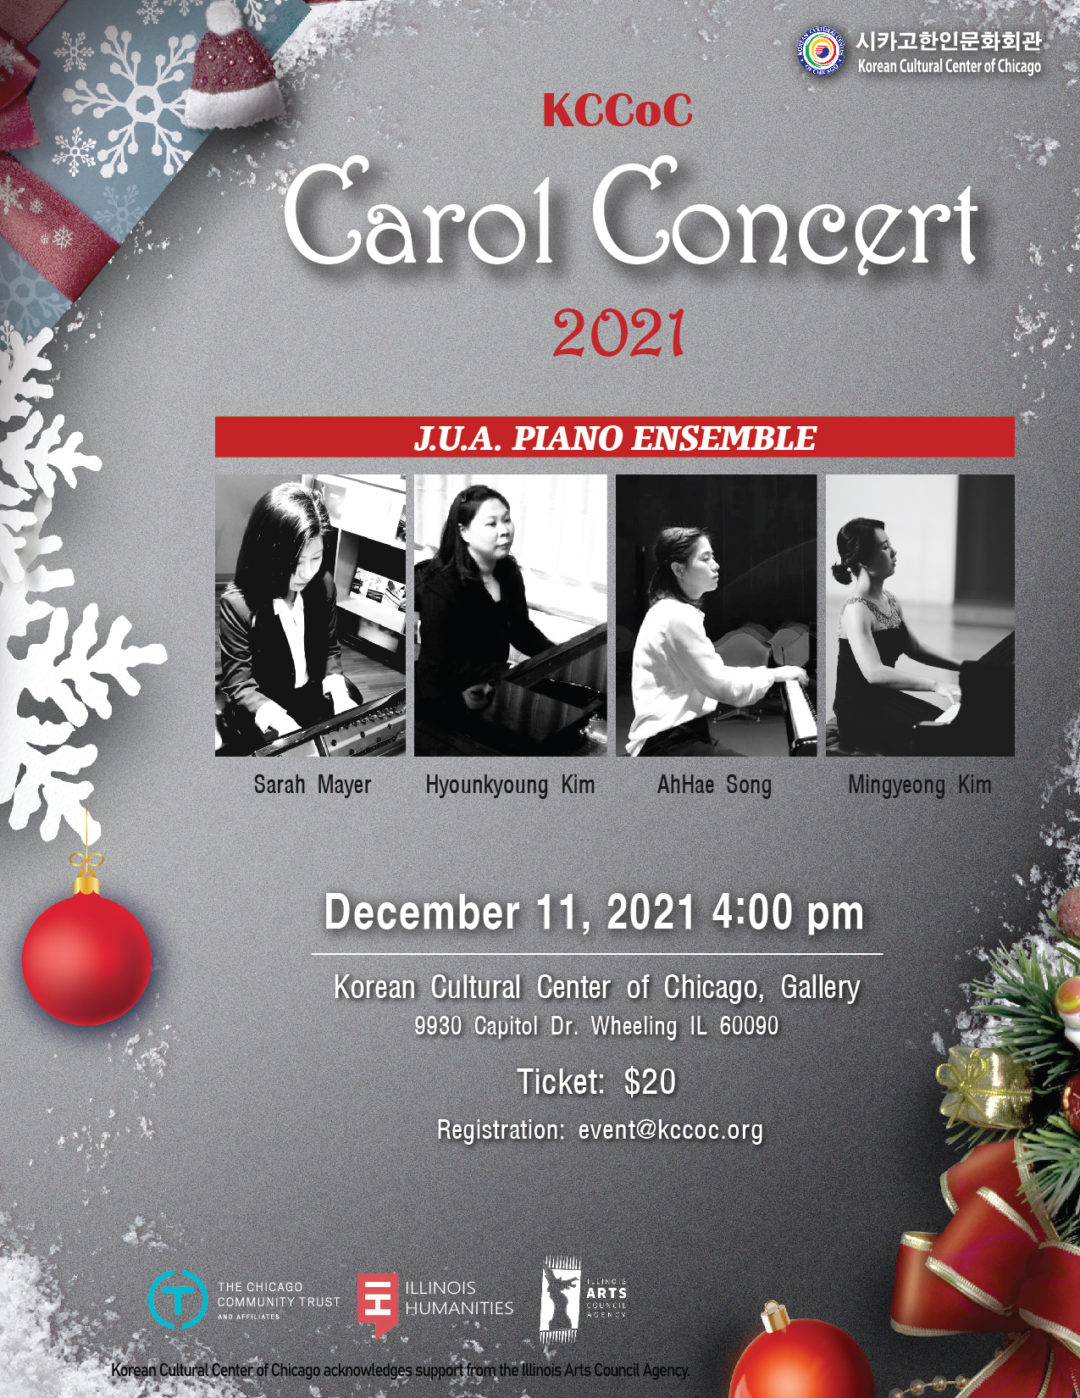 KCCoC Carol Concert 2021